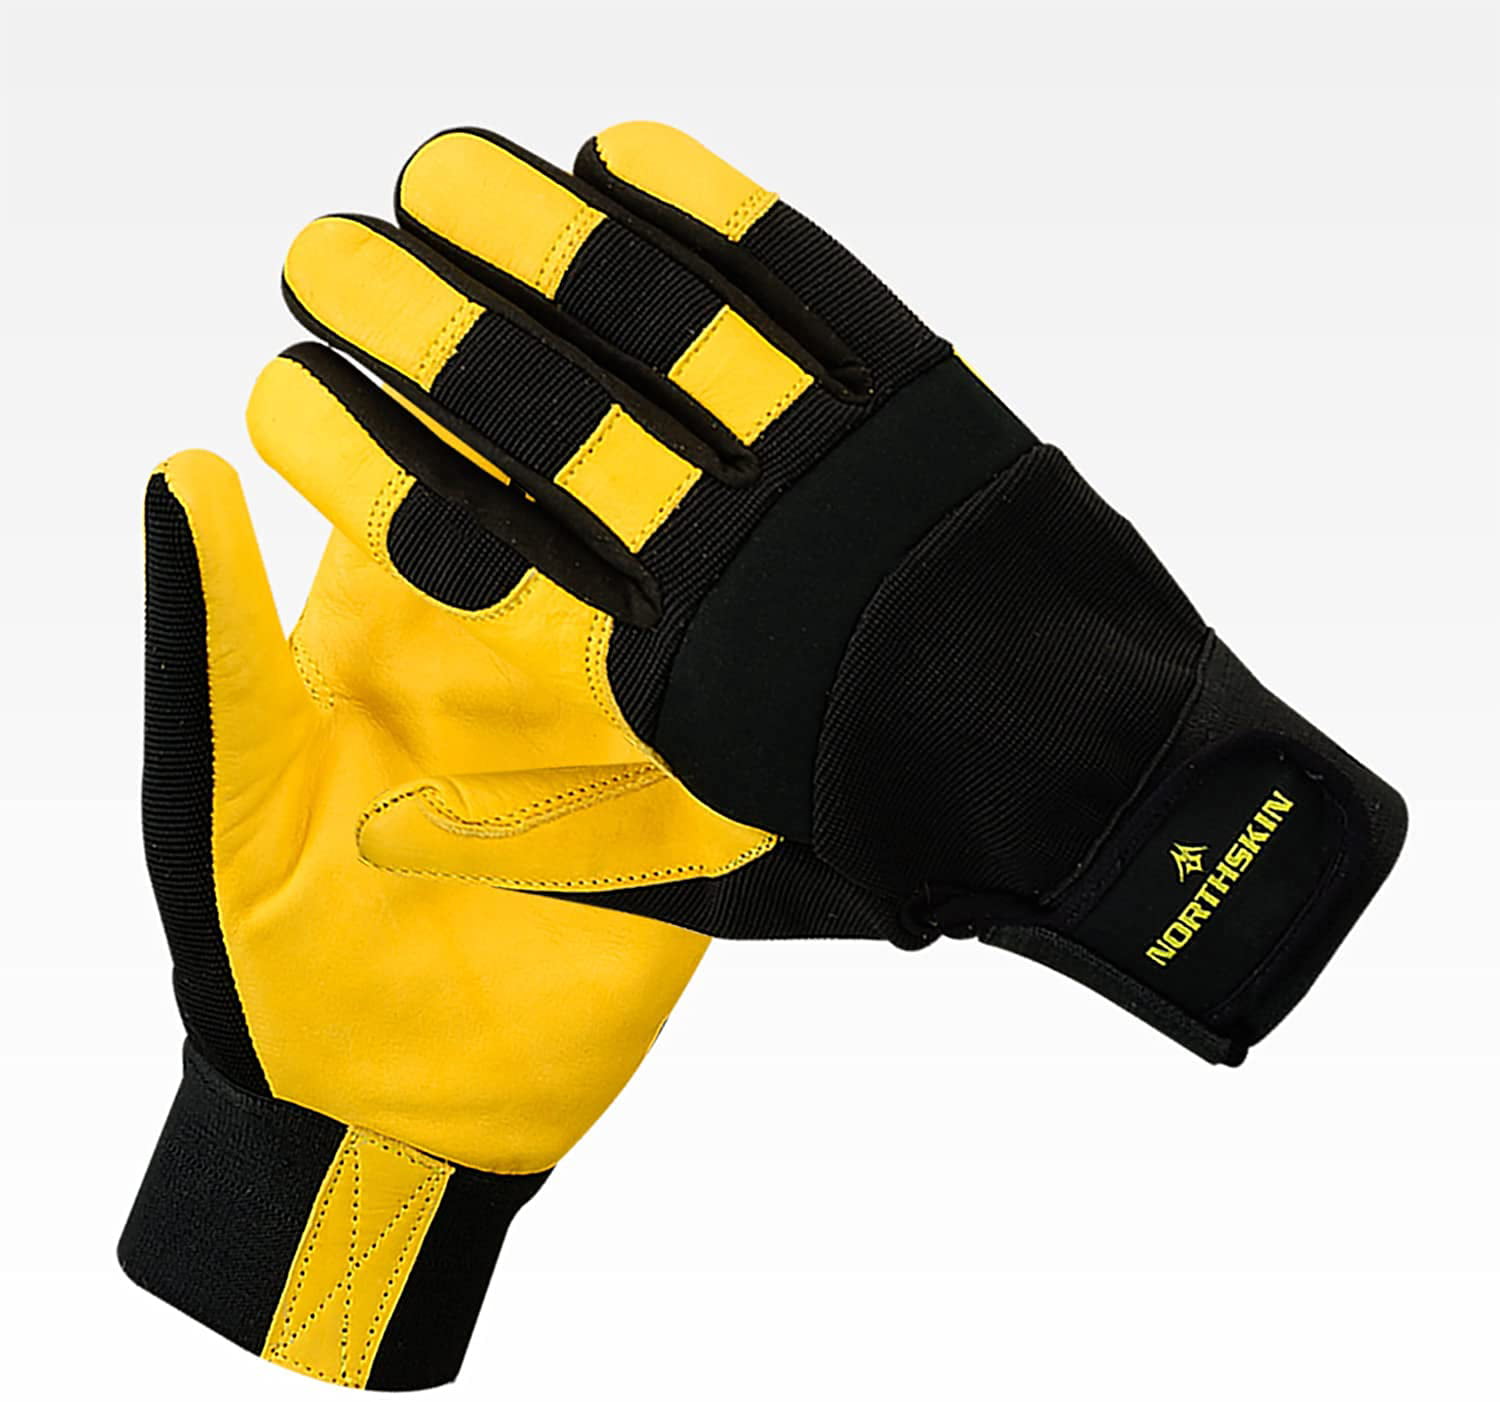 2X Long Sleeves Safe Work Gloves Mechanics Welding Protective Heat/Cut Resistant 